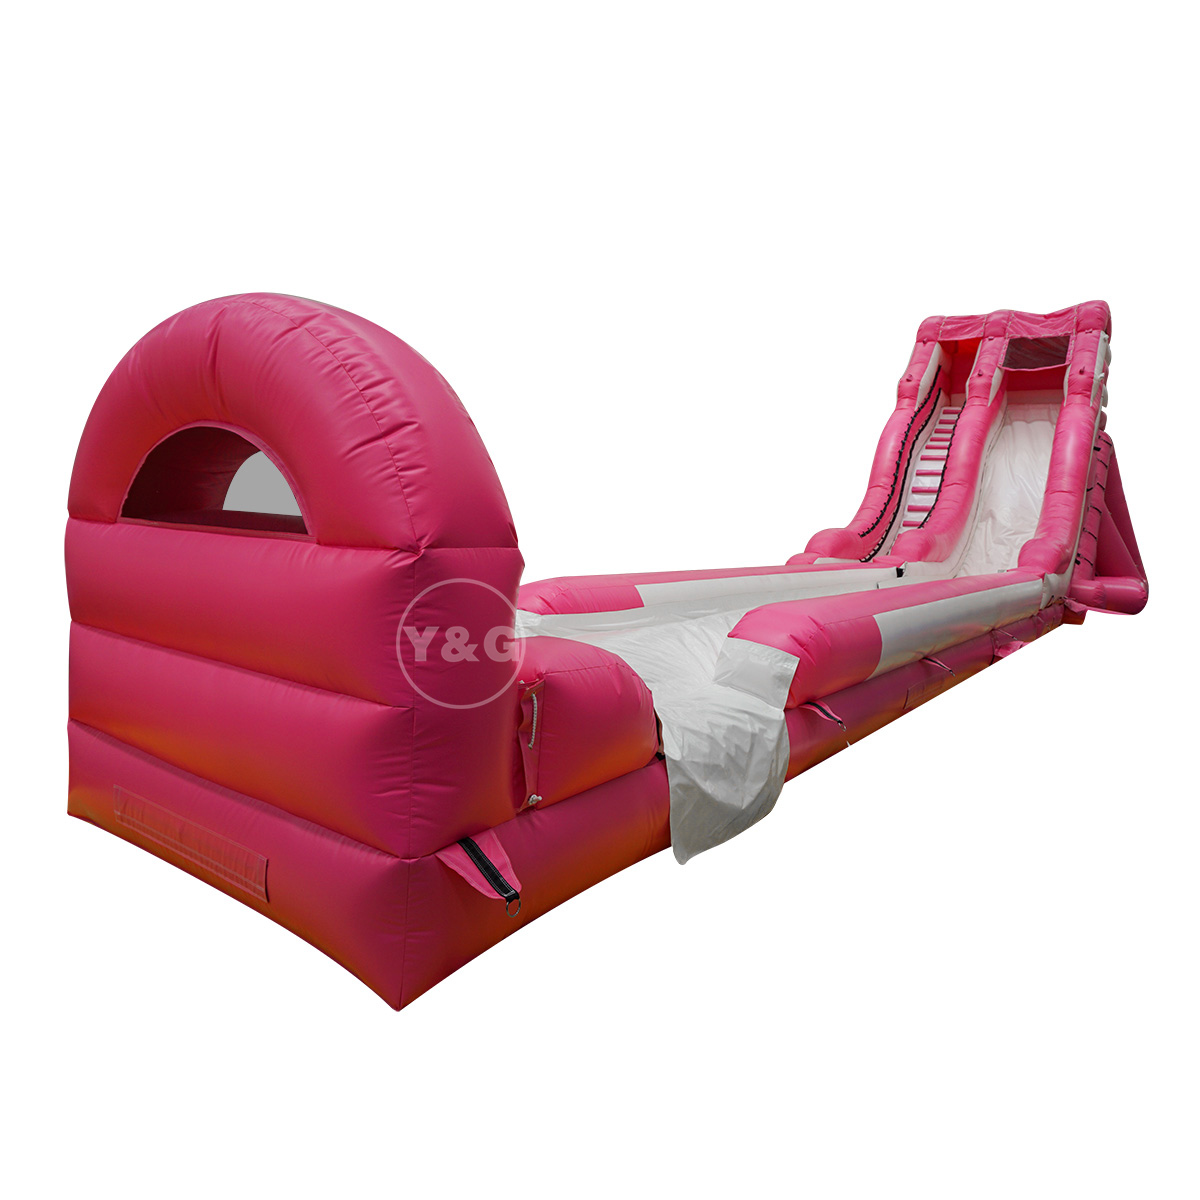 Hot sale pink inflatable water slideYG-97